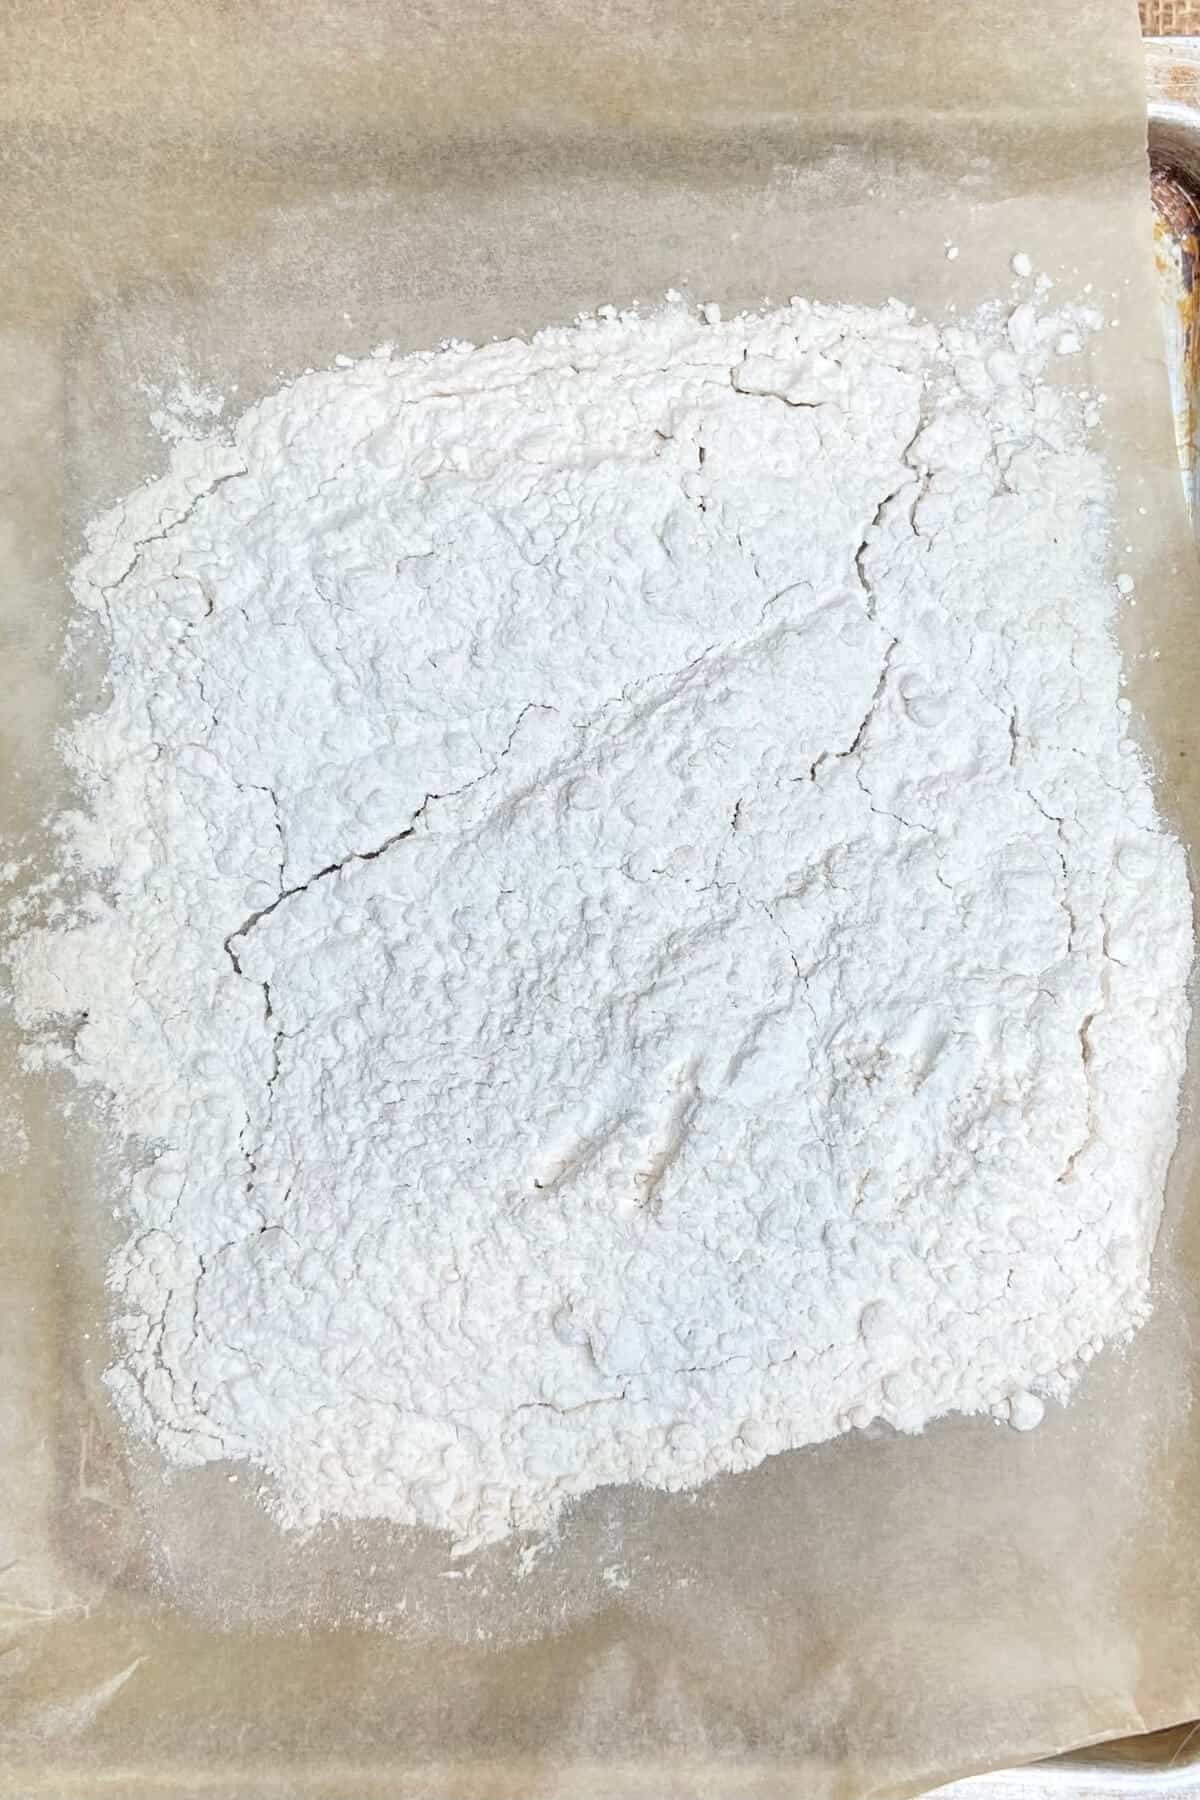 Flour on a parchment lined baking sheet.